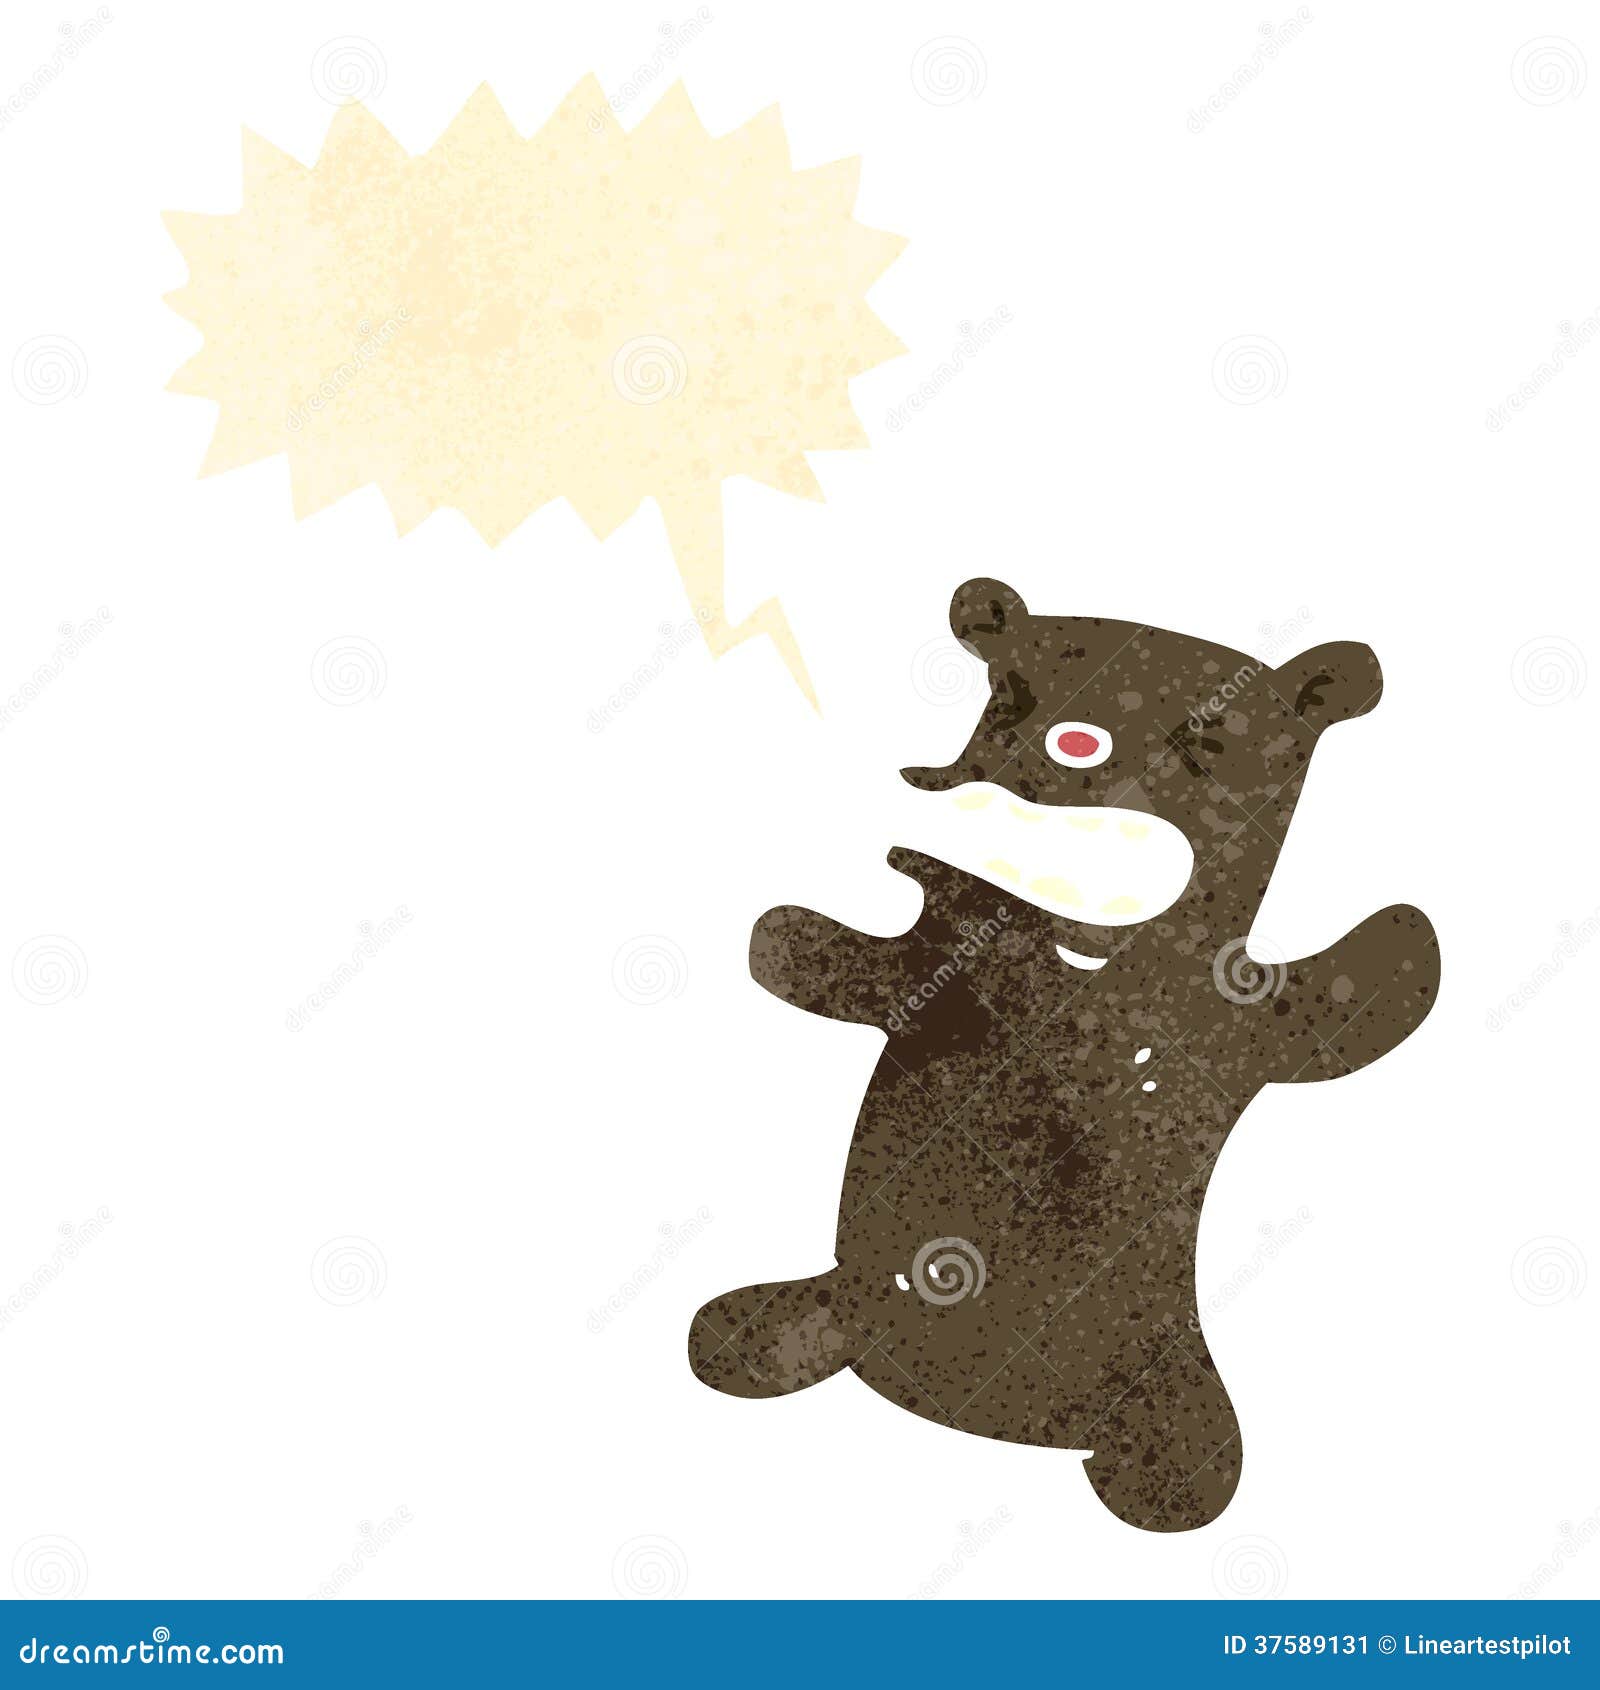 Angry teddy bear cartoon stock vector. Illustration of speech - 37589131